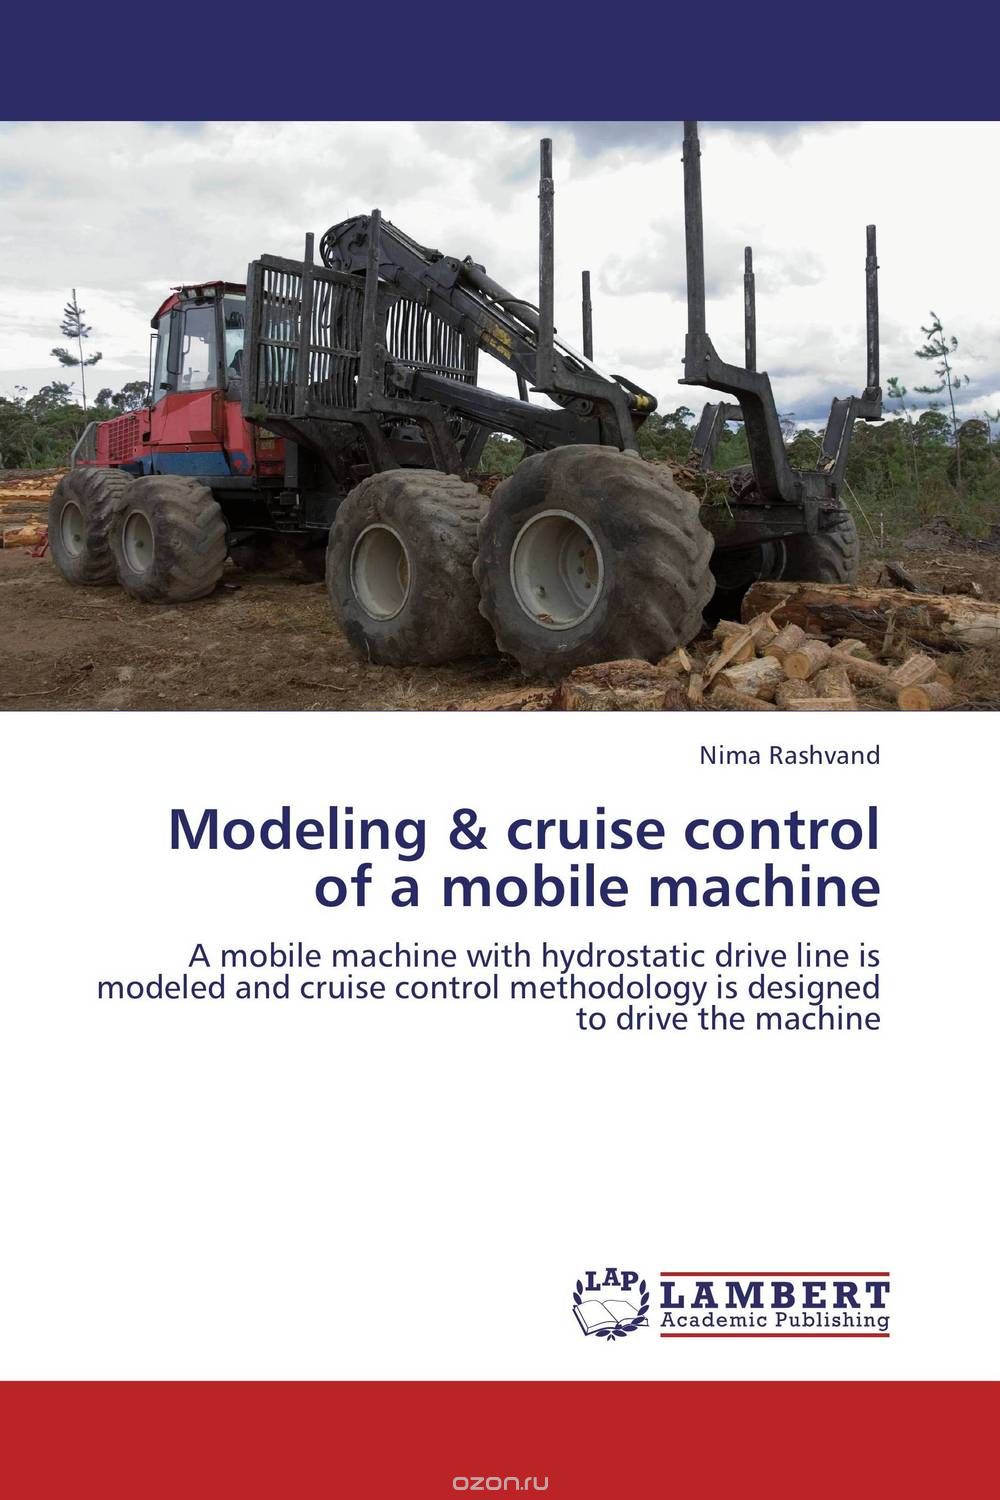 Скачать книгу "Modeling & cruise control of a mobile machine"